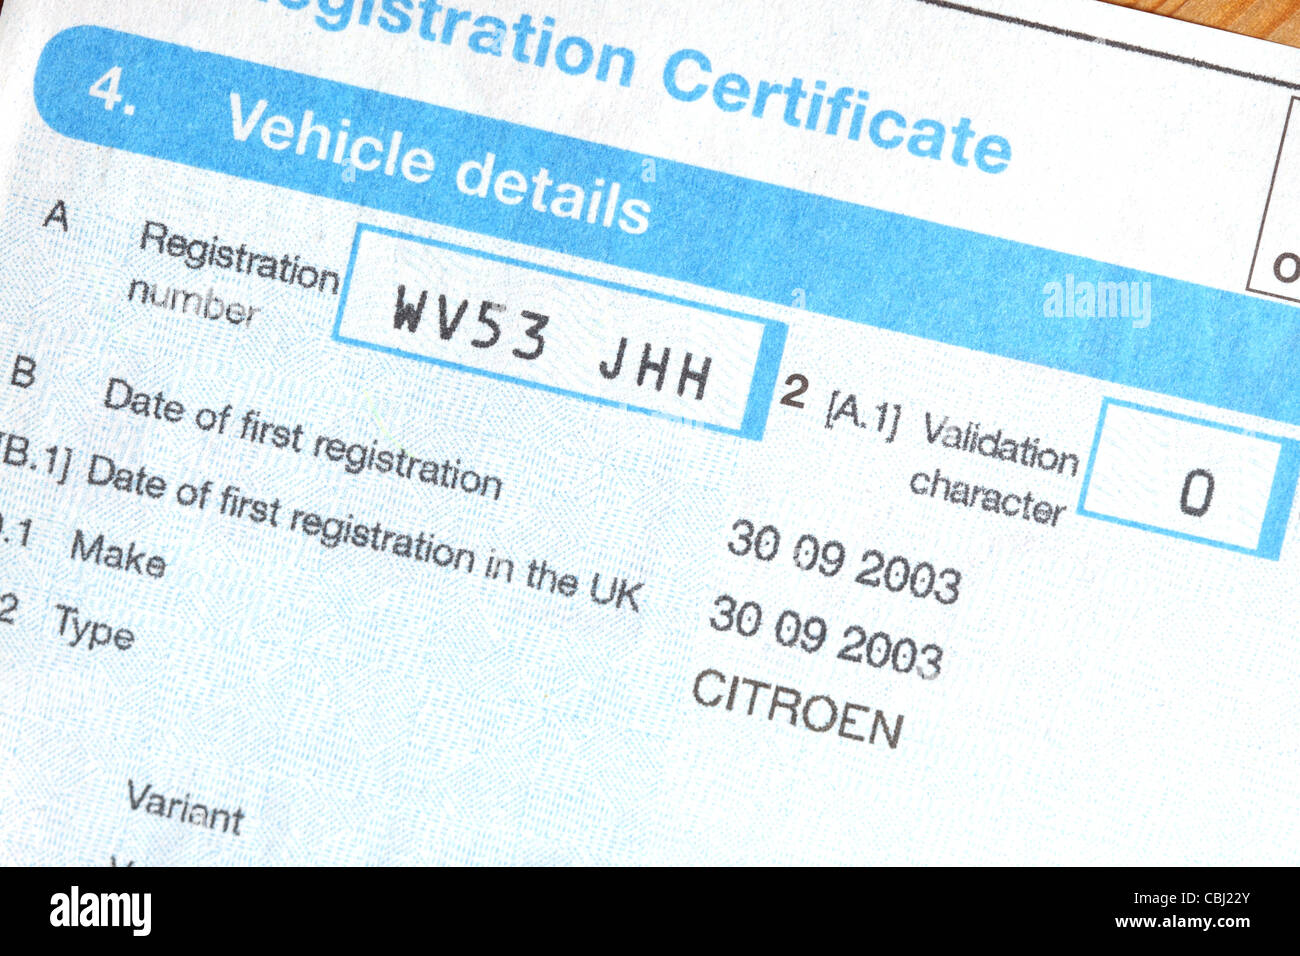 application for a vehicle registration certificate v5c